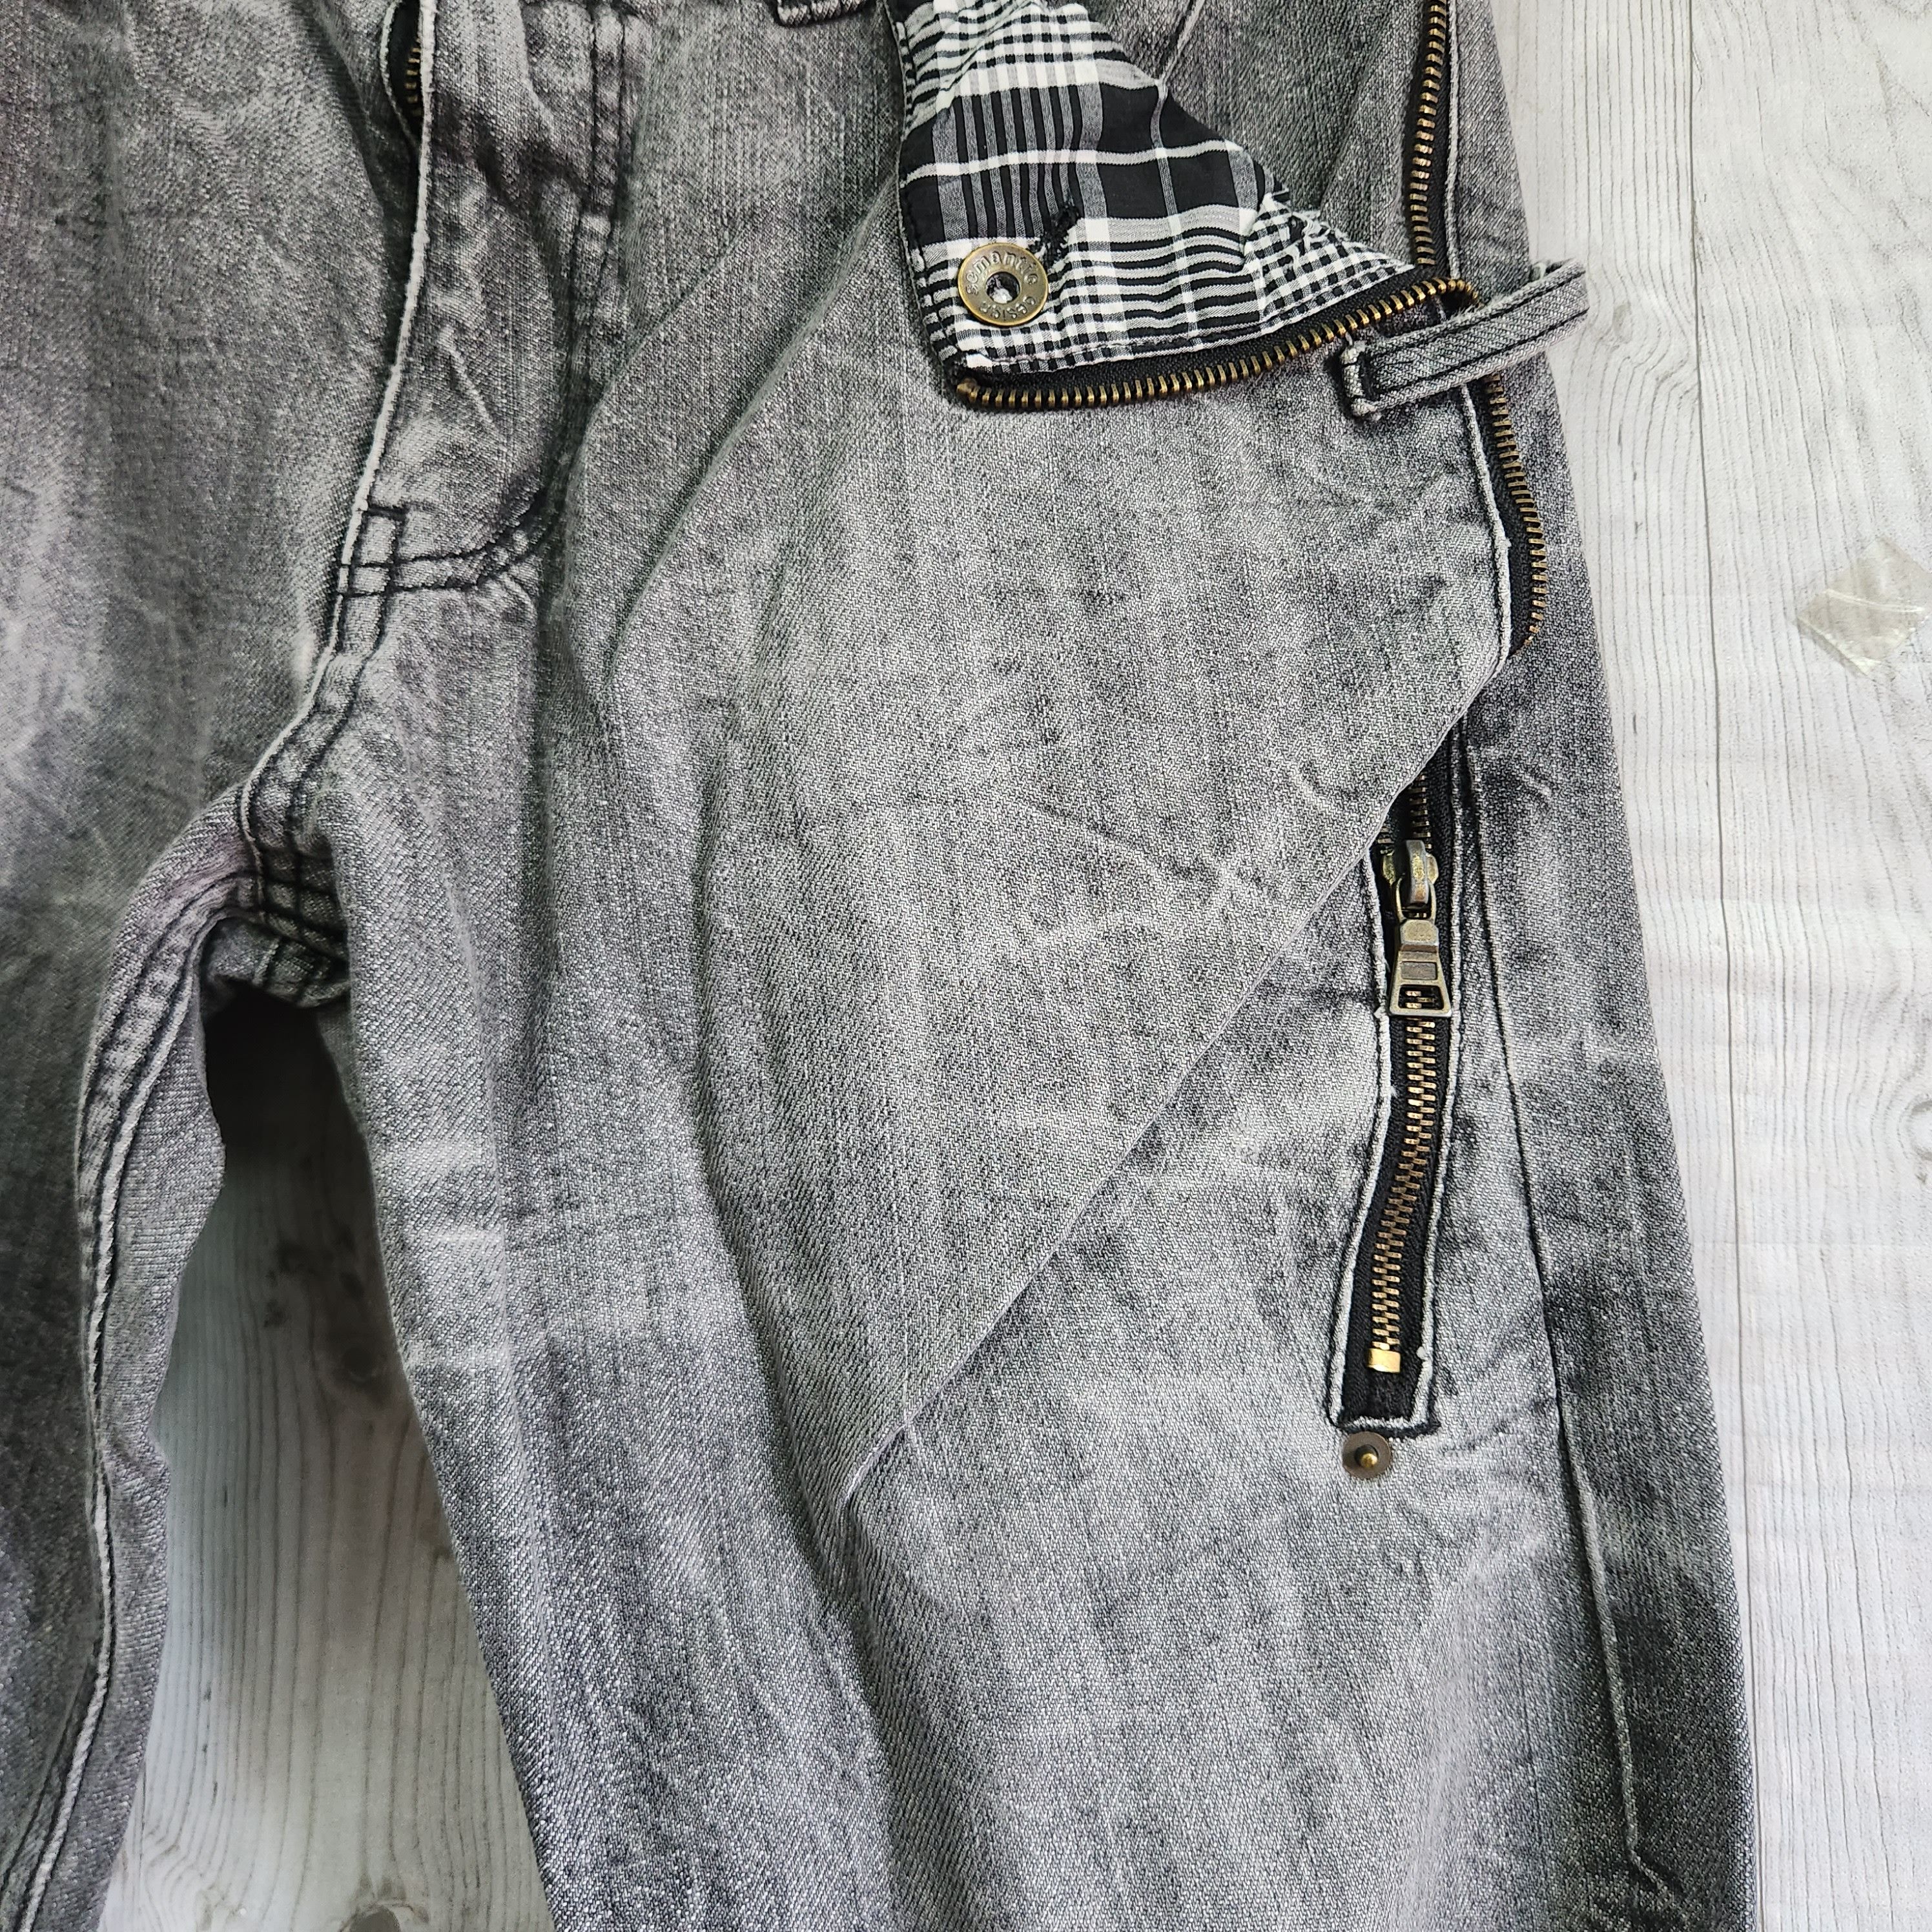 Semantic Design Hysteric Glamour Japan Denim Jeans - 16